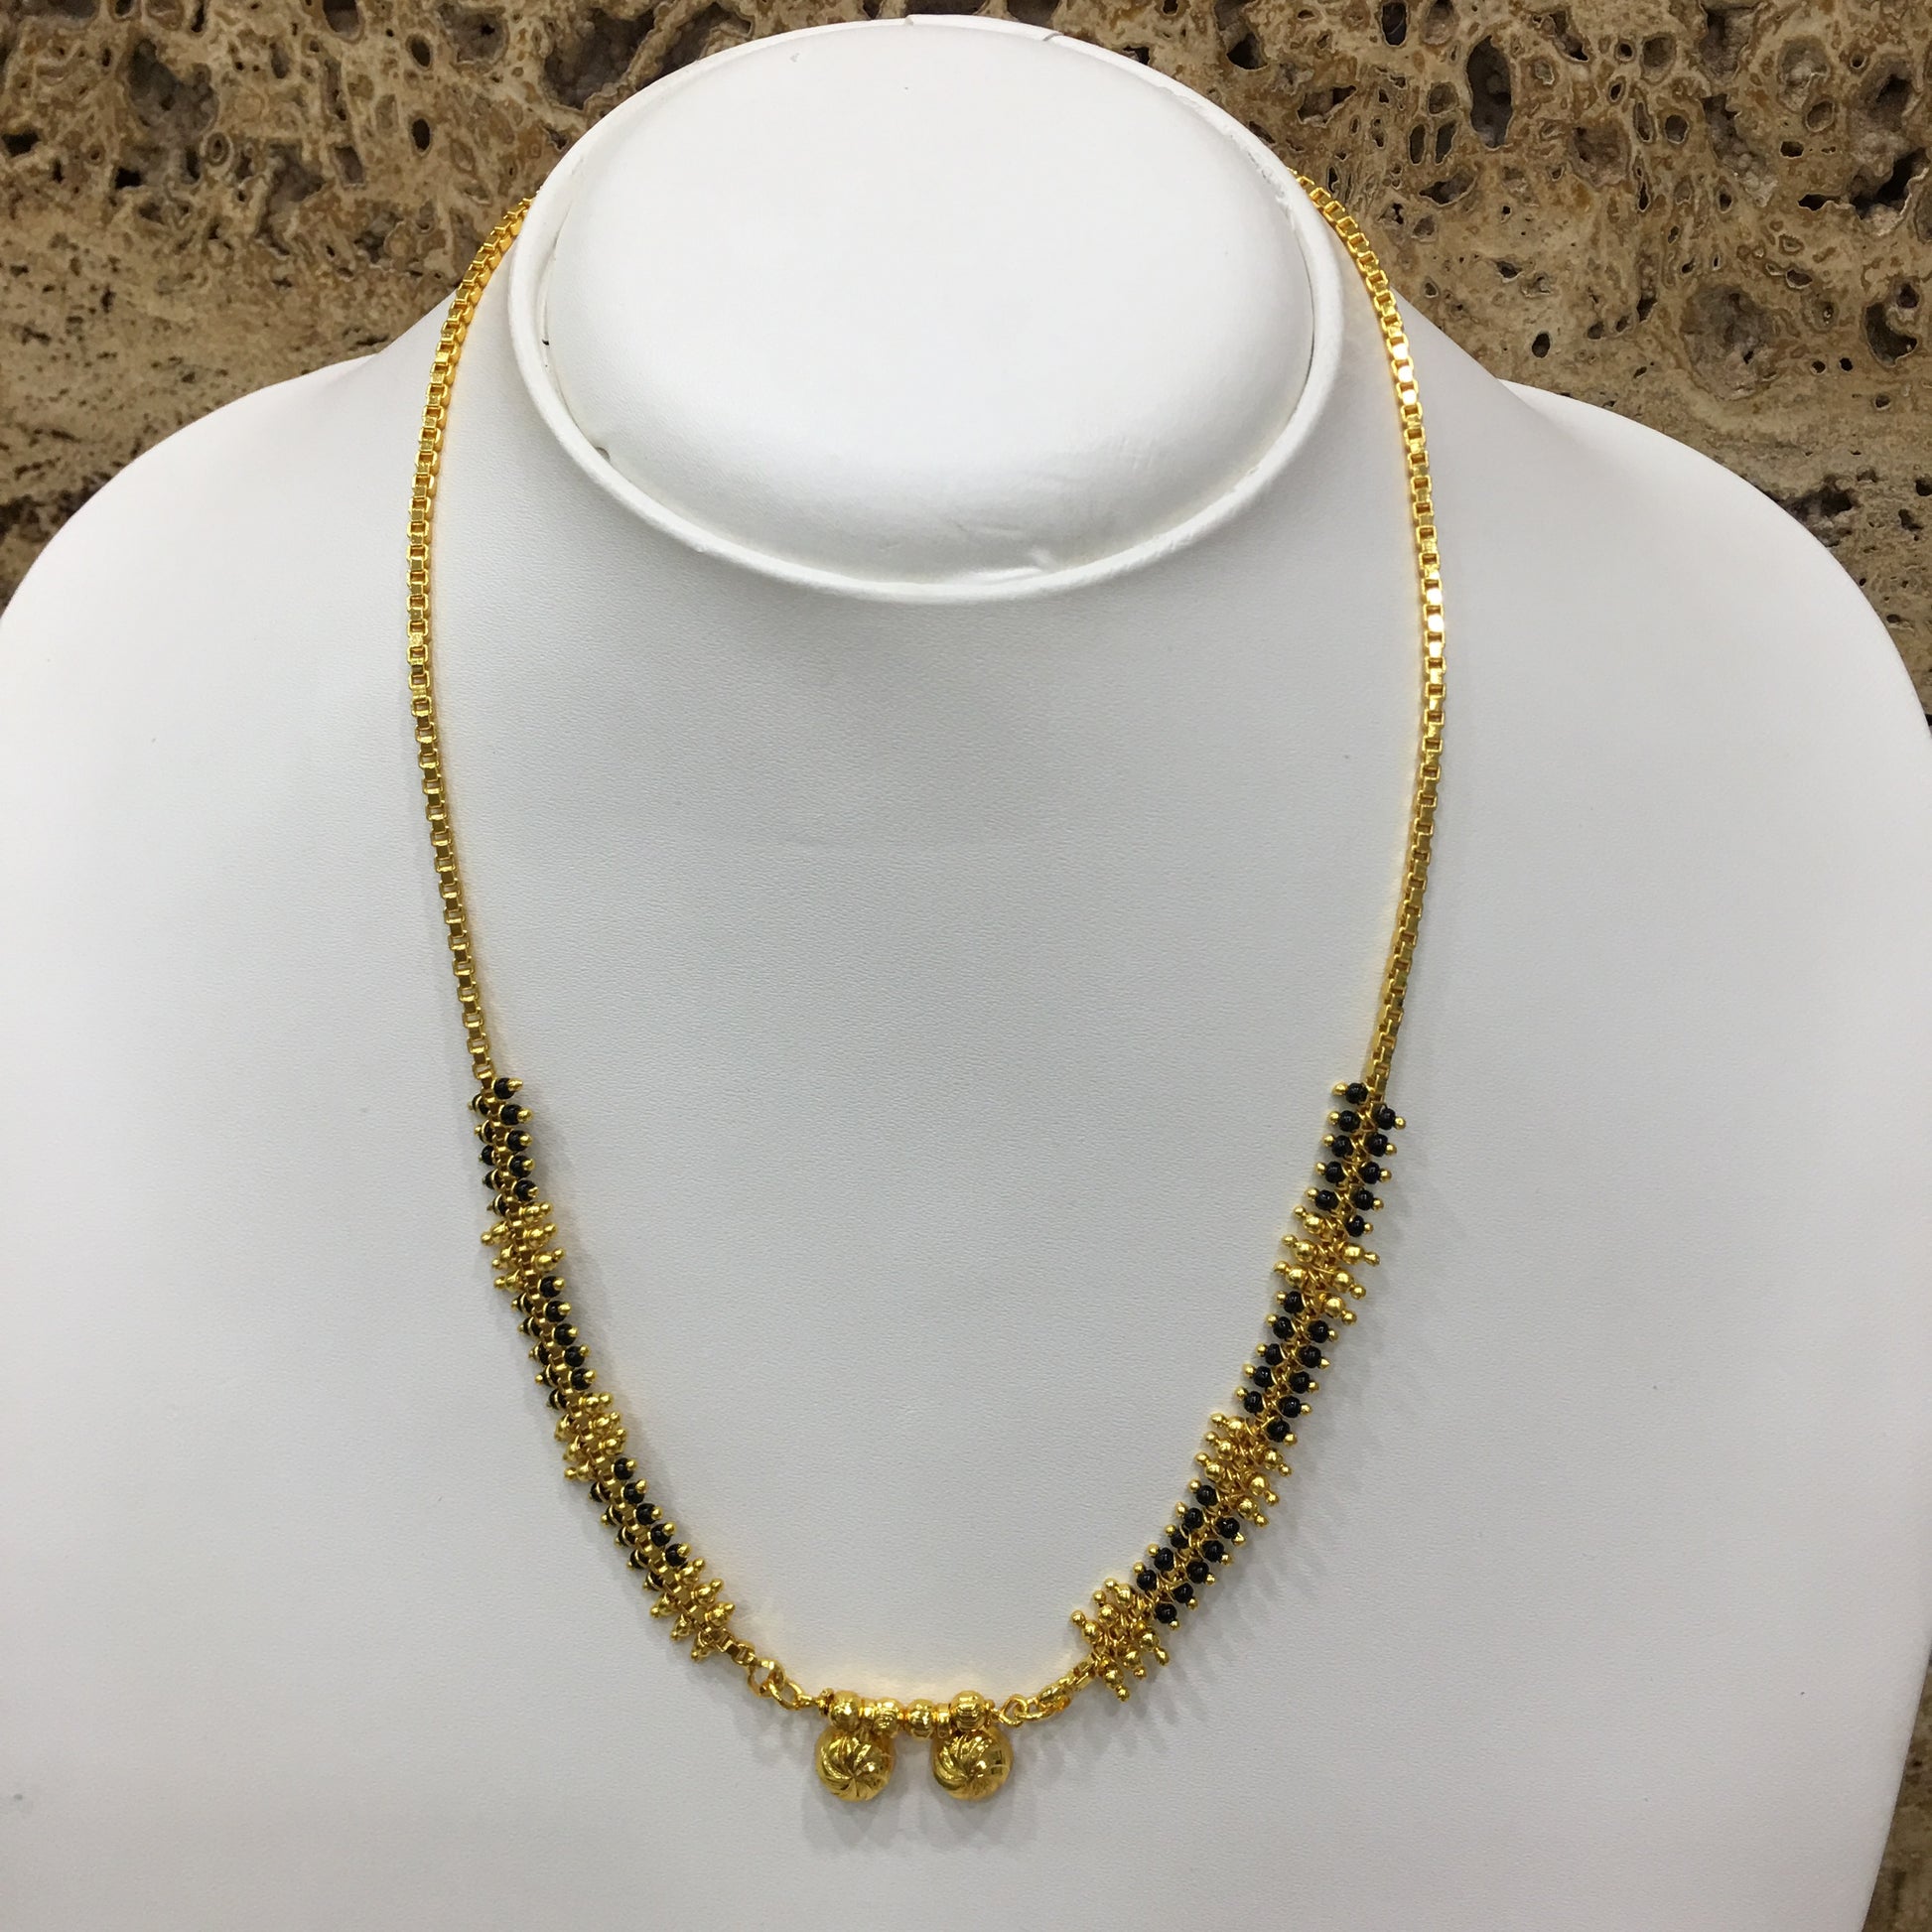 Digital Dress Room Short Mangalsutra Designs Gold Plated Latest 2 Vati Pendant Black & Gold Beads Traditional Mangalsutra